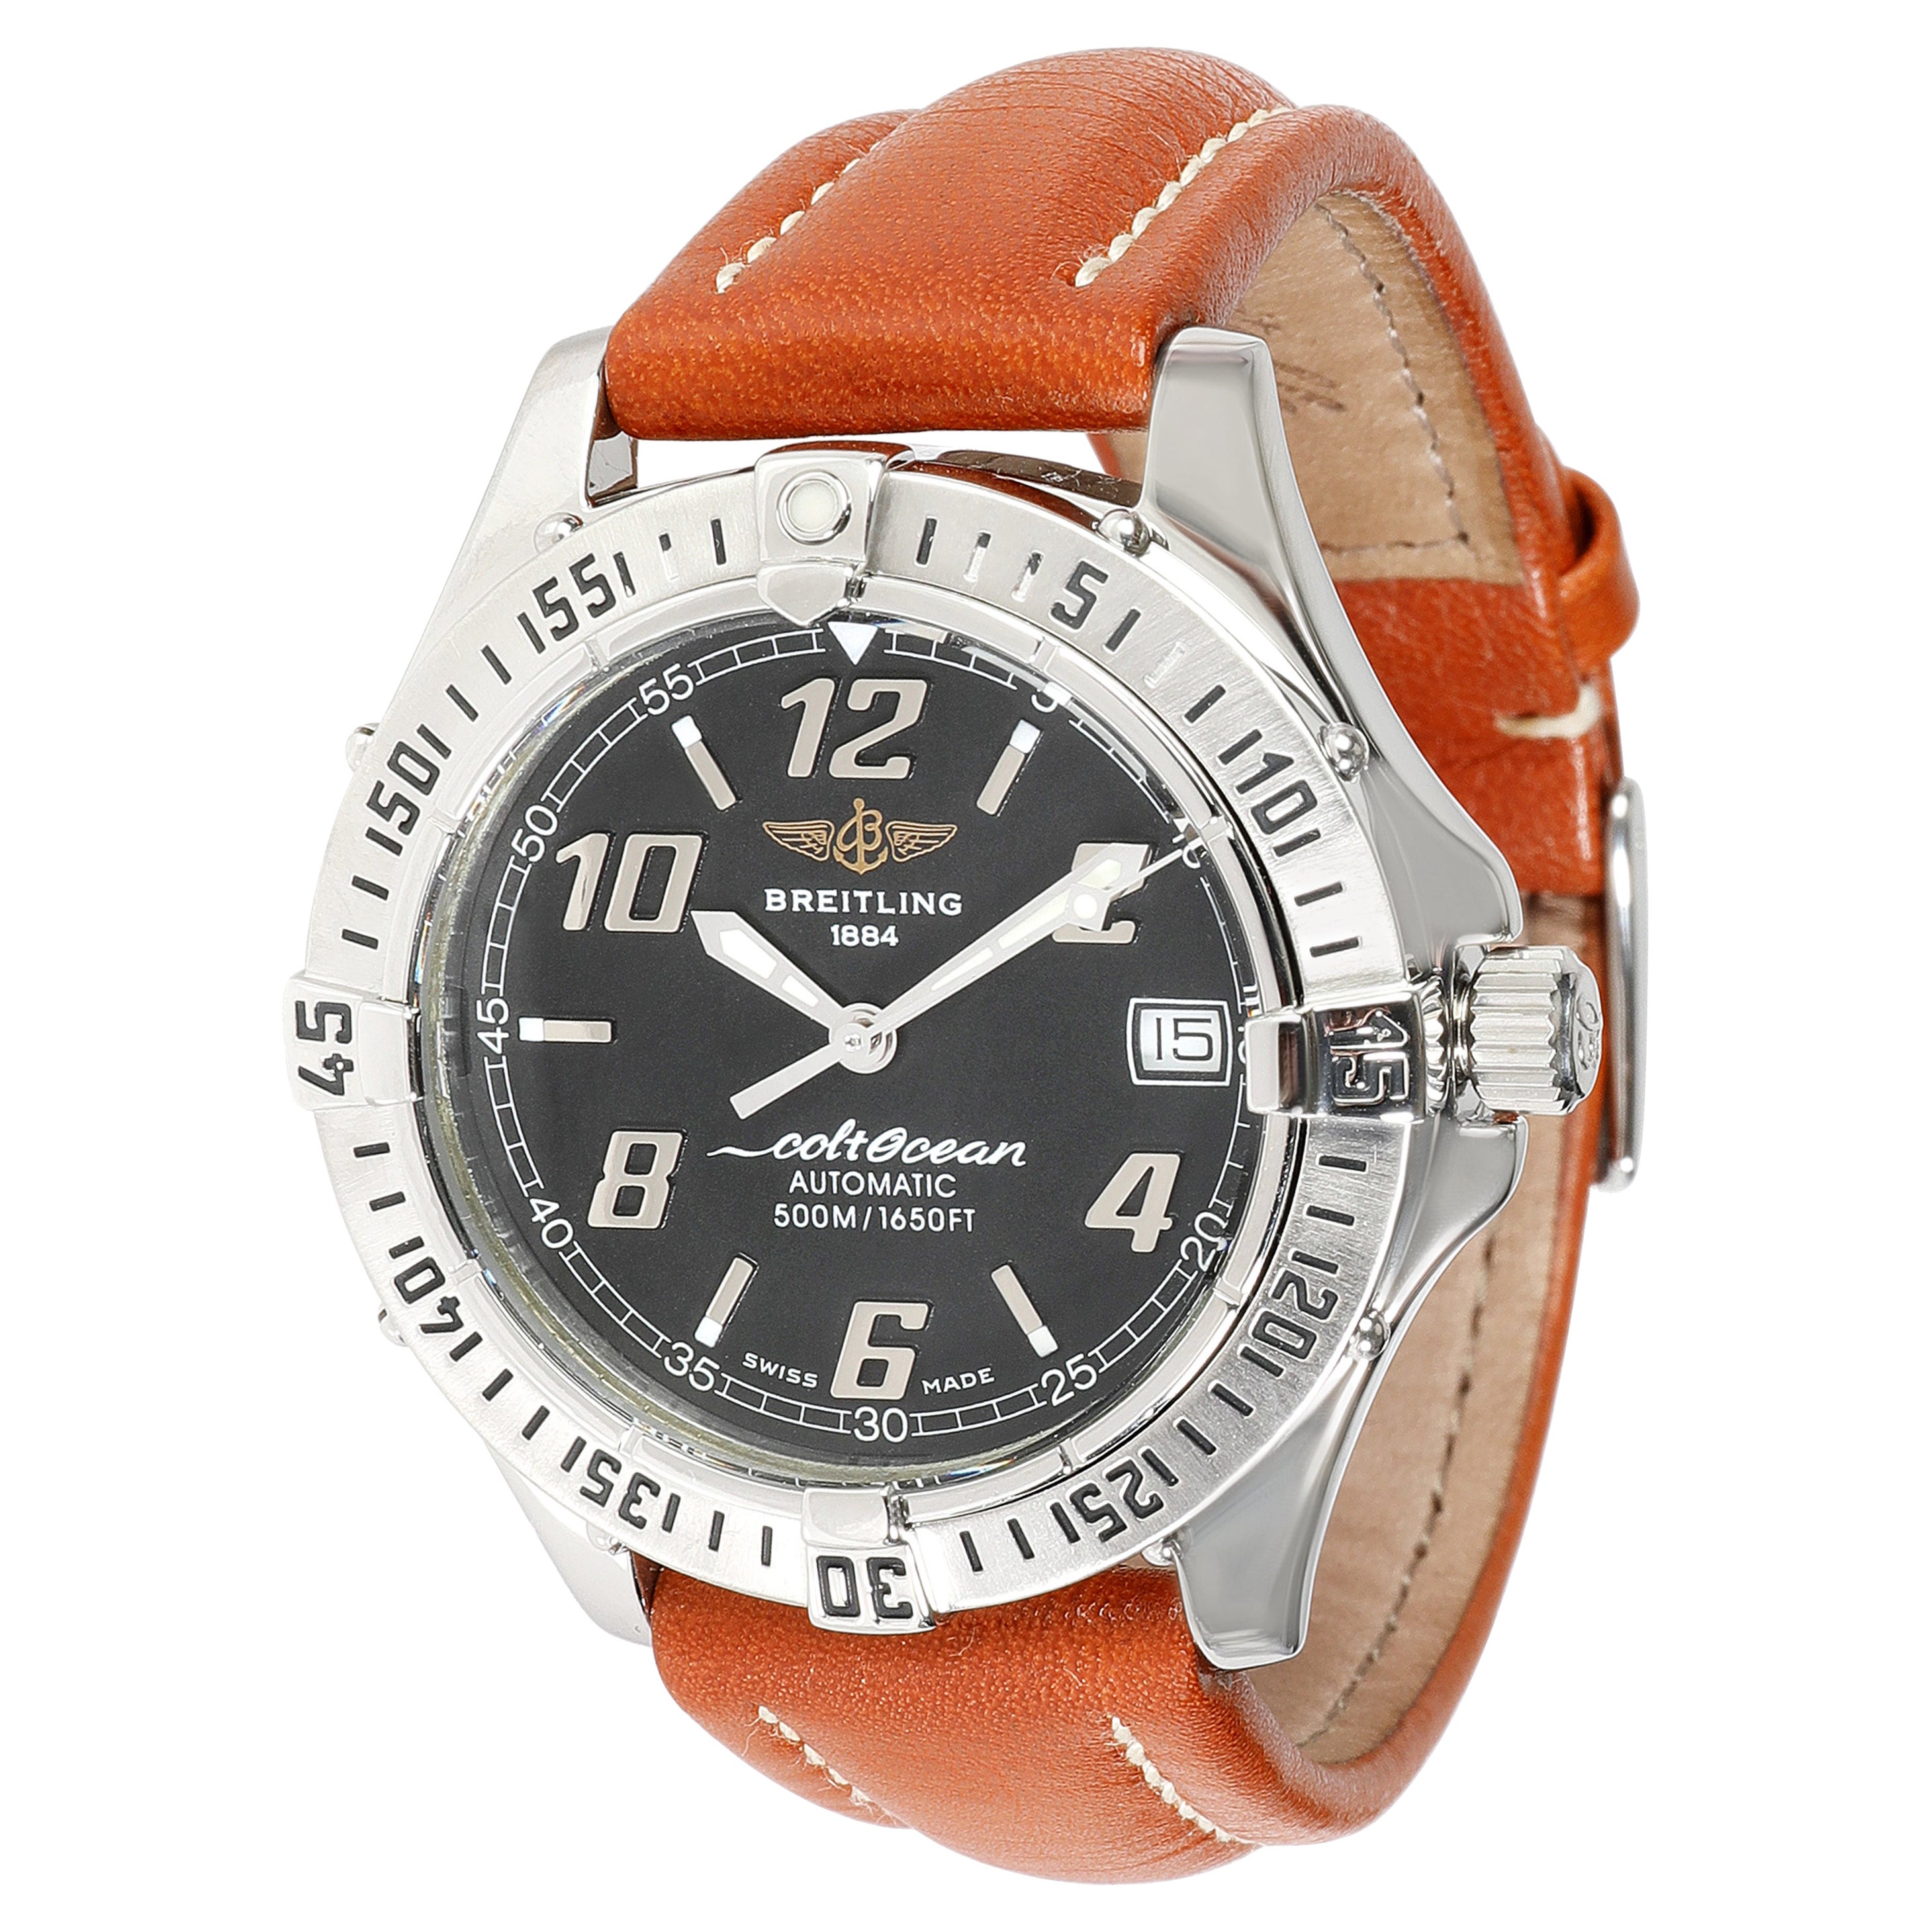 Breitling Colt Ocean A1705011/B414 Men's Watch in Stainless Steel